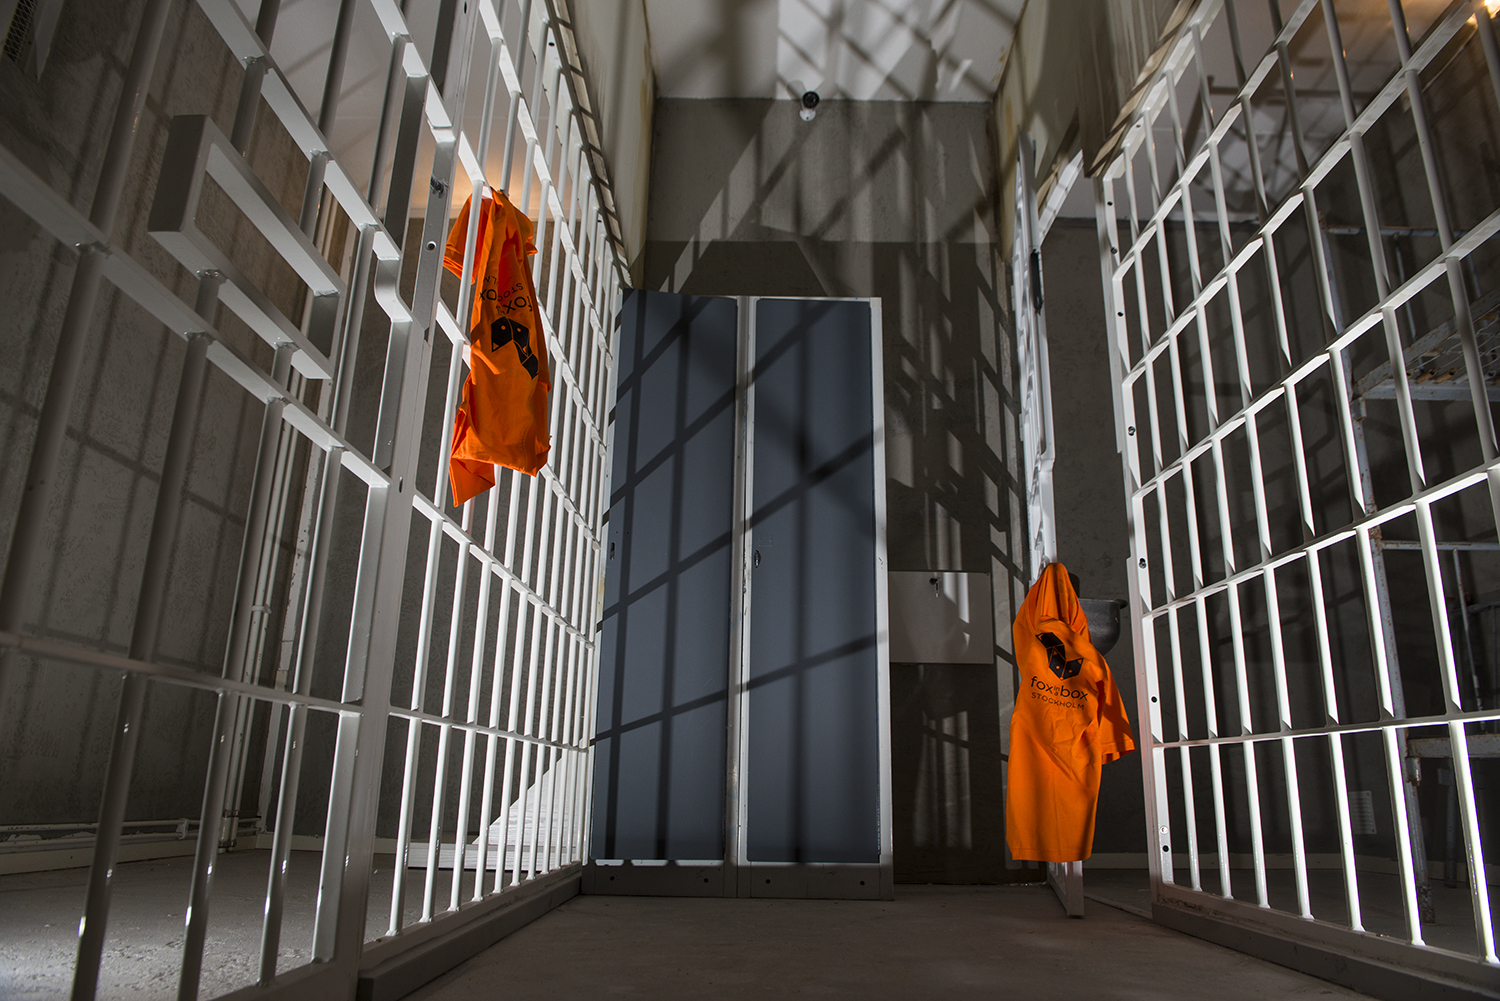 Prison image